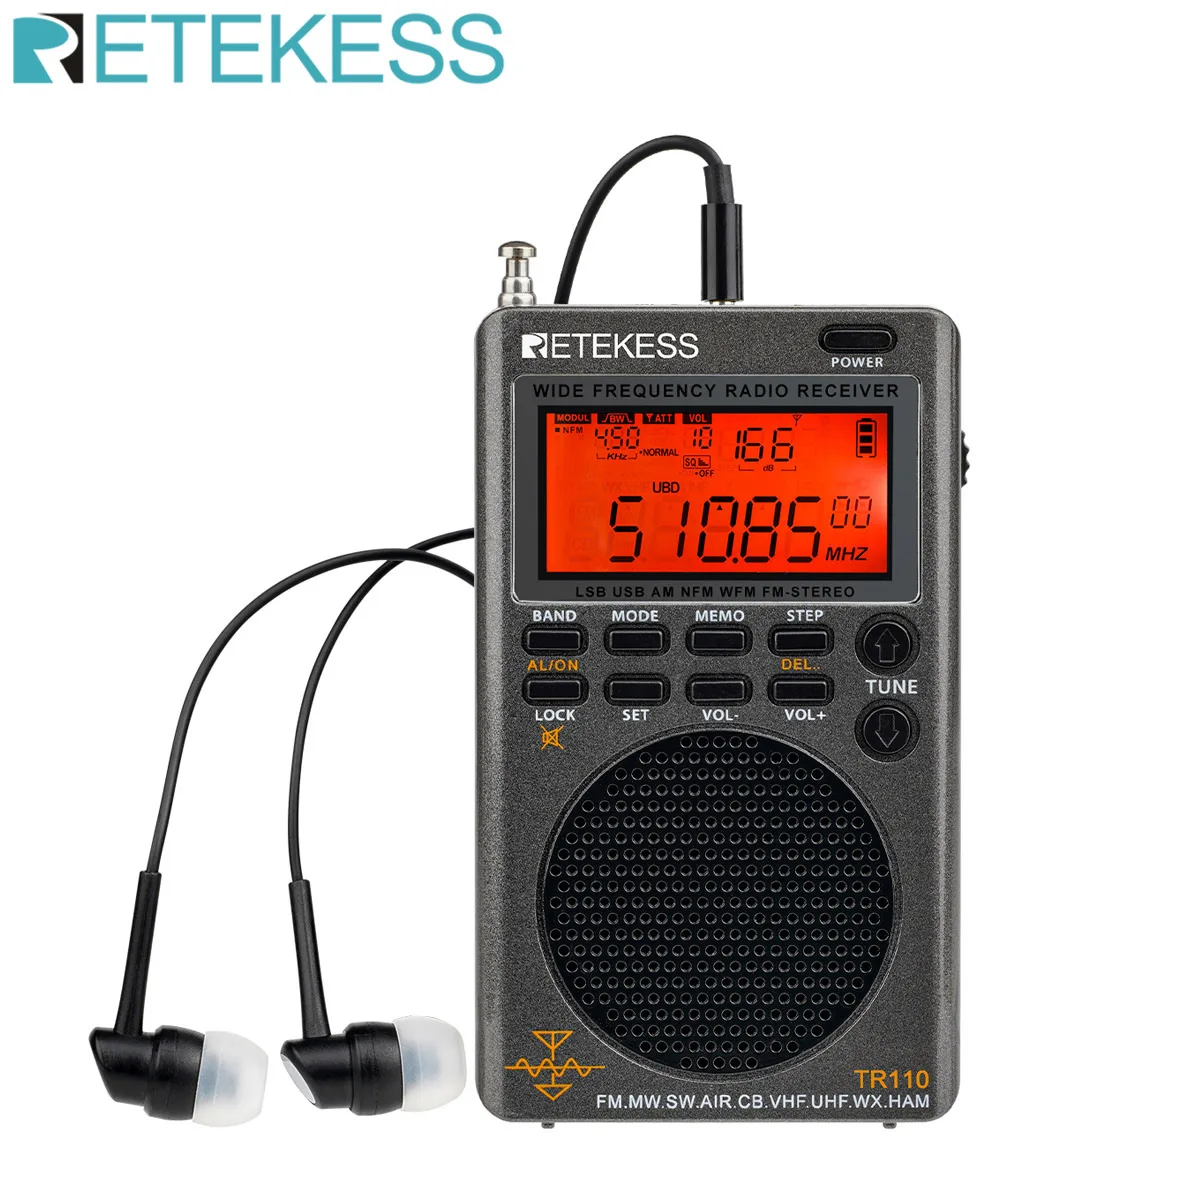 Портативный цифровой радиоприемник Retekess TR110, FM/MW/SW/SSB/LSB/AIR/CB/VHF/UHF/UBD, Полнодиапазонный радиоприемник, стерео Bluetooth, будильник